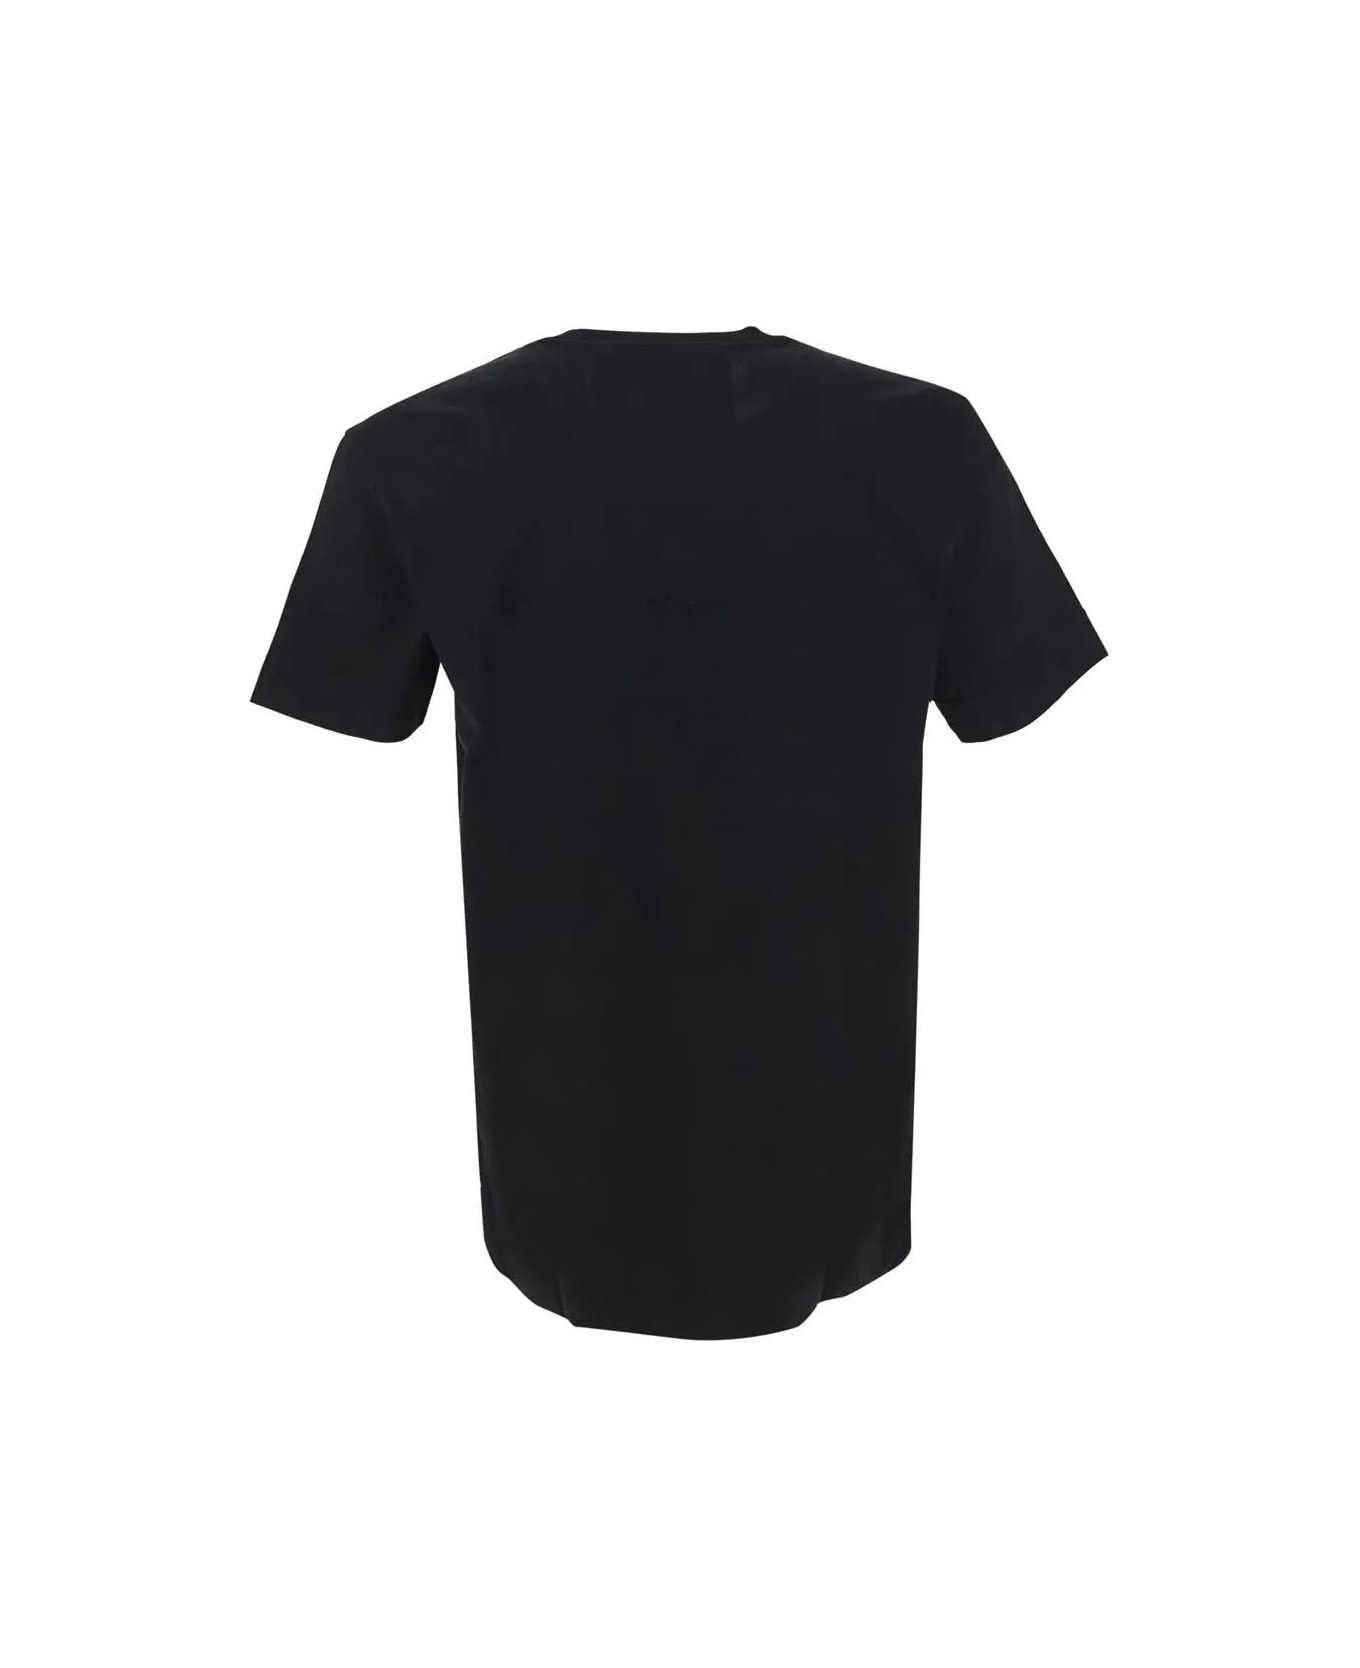 Givenchy Cotton T-shirt - Black